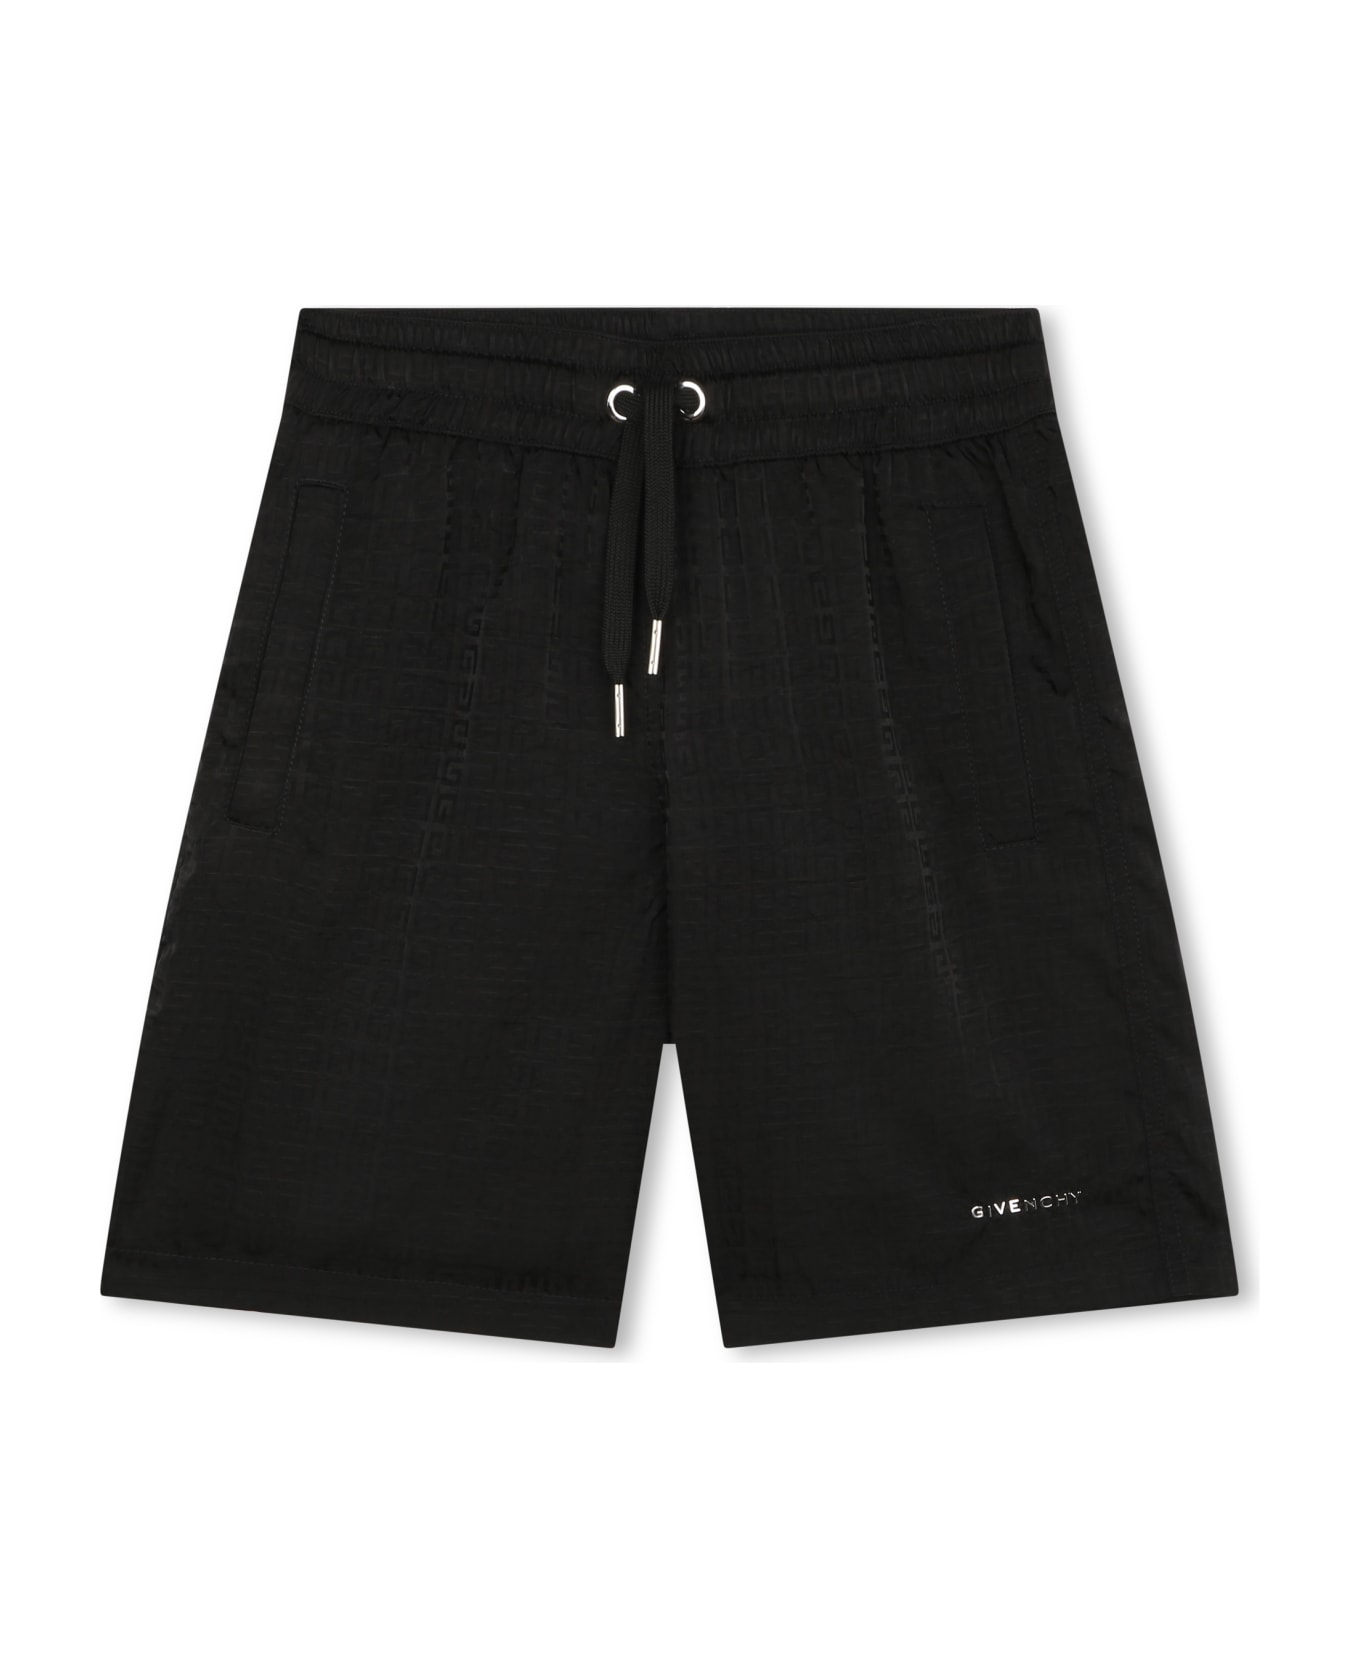 Givenchy Sports Shorts With Monogram - Black